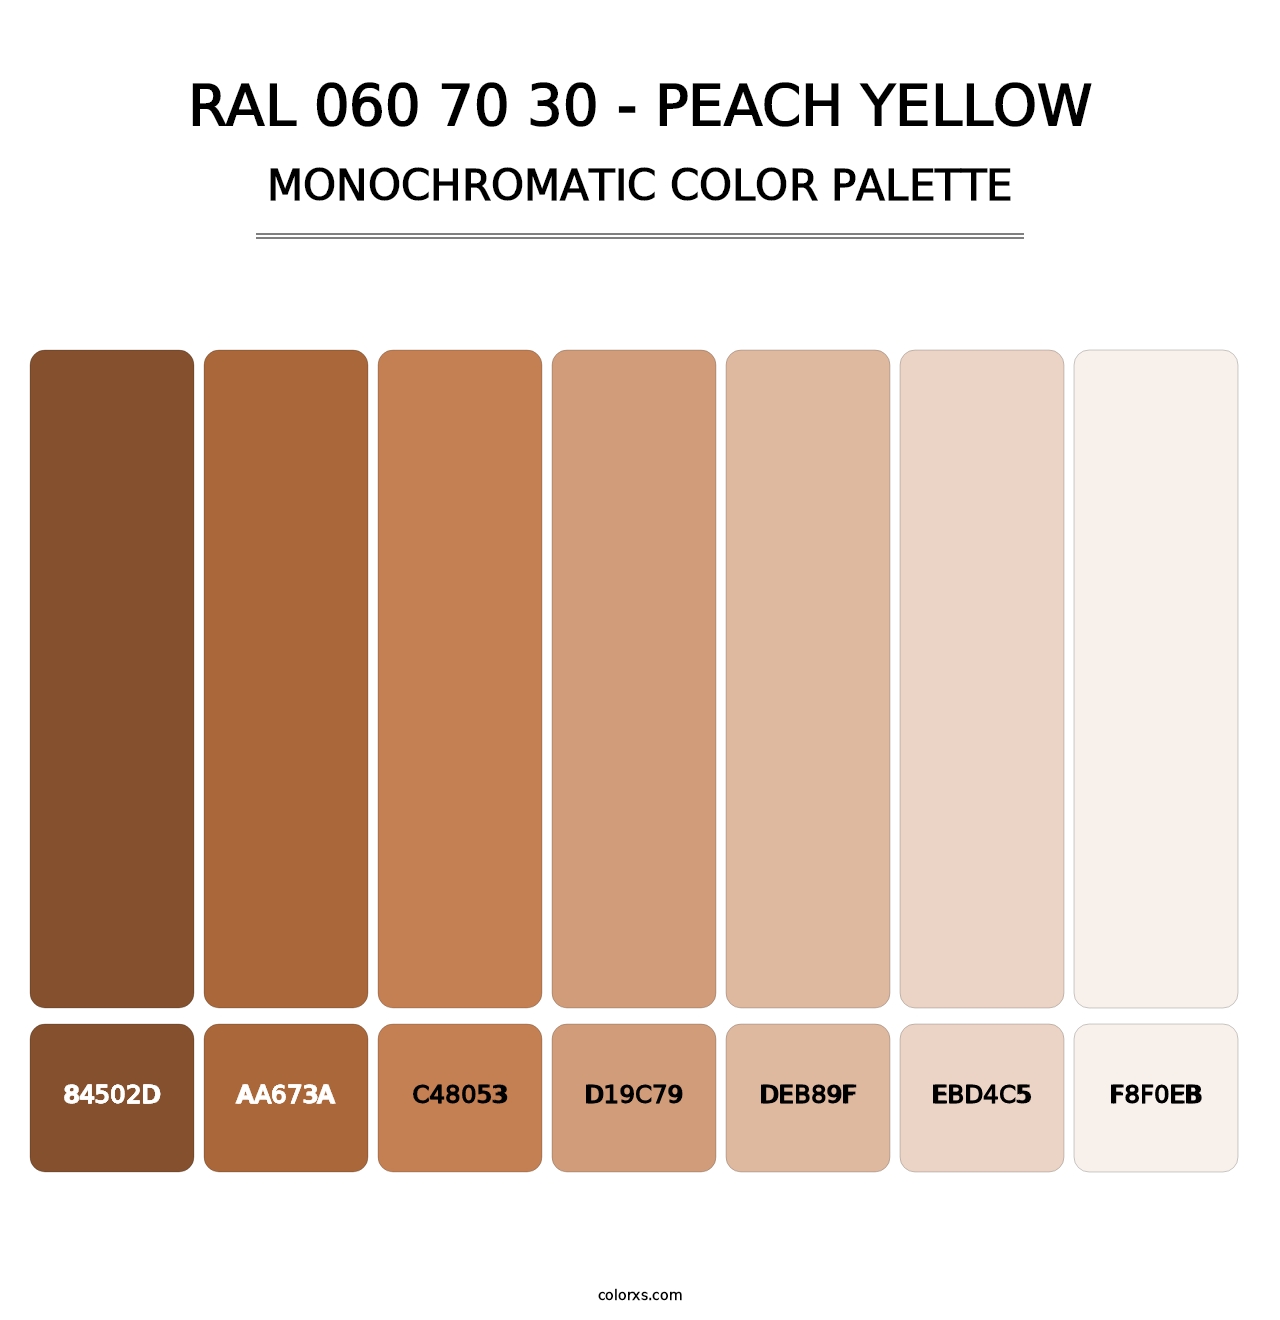 RAL 060 70 30 - Peach Yellow - Monochromatic Color Palette